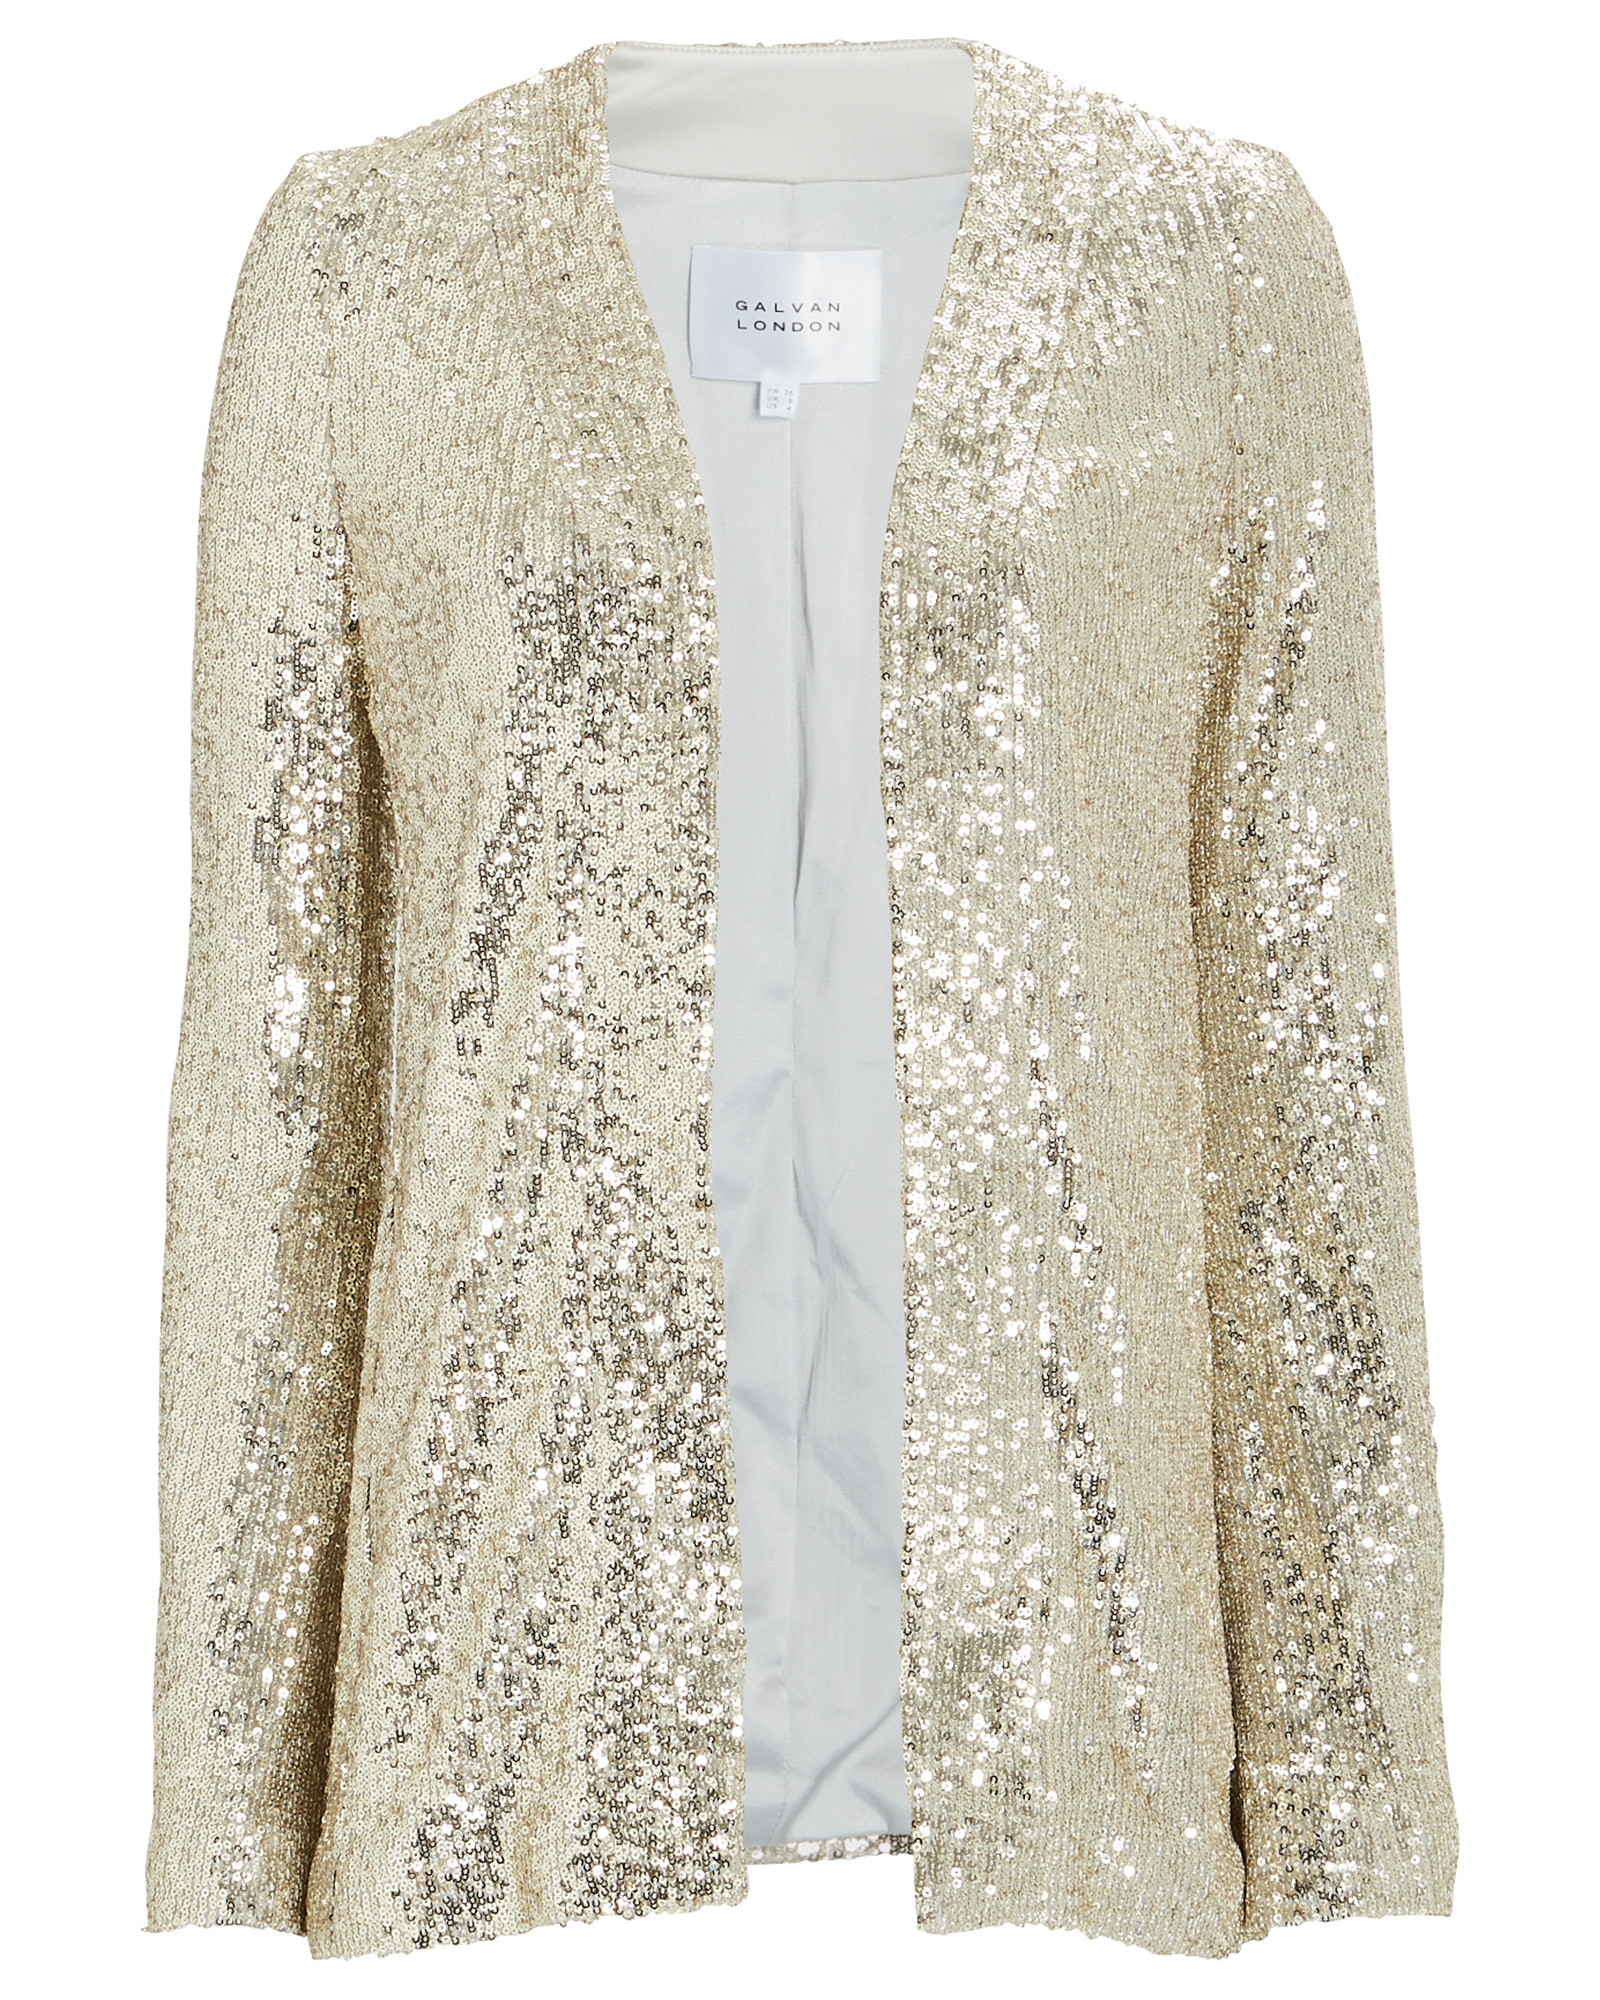 Galvan Sahara Sequin Embellished Evening Jacket | INTERMIX®